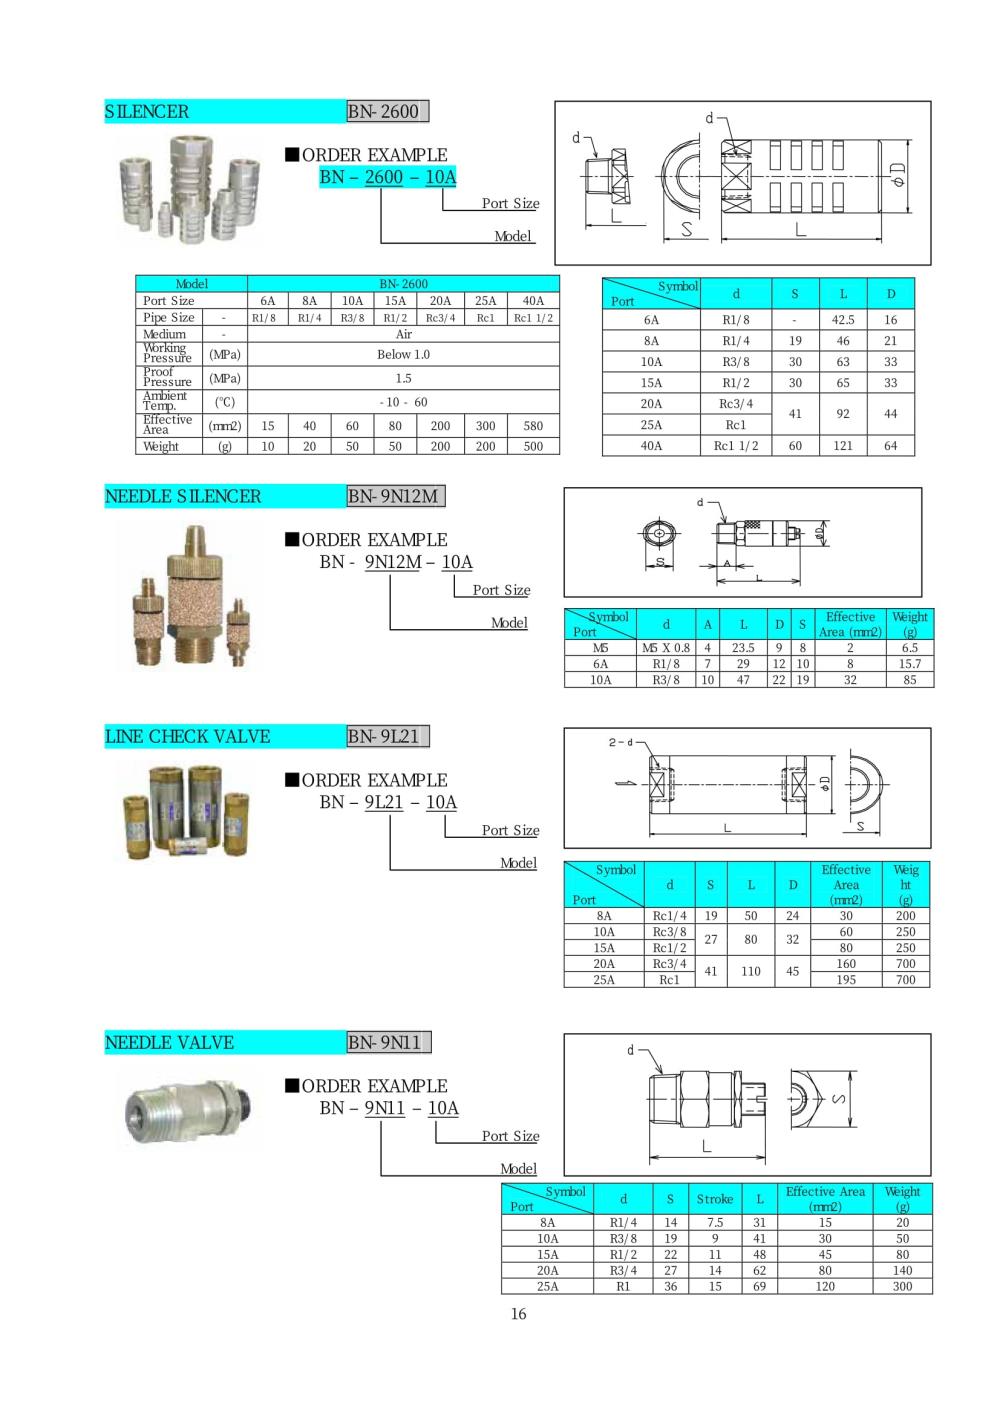 NIHON SEIKI Needle Silencer BN-9N12M Series